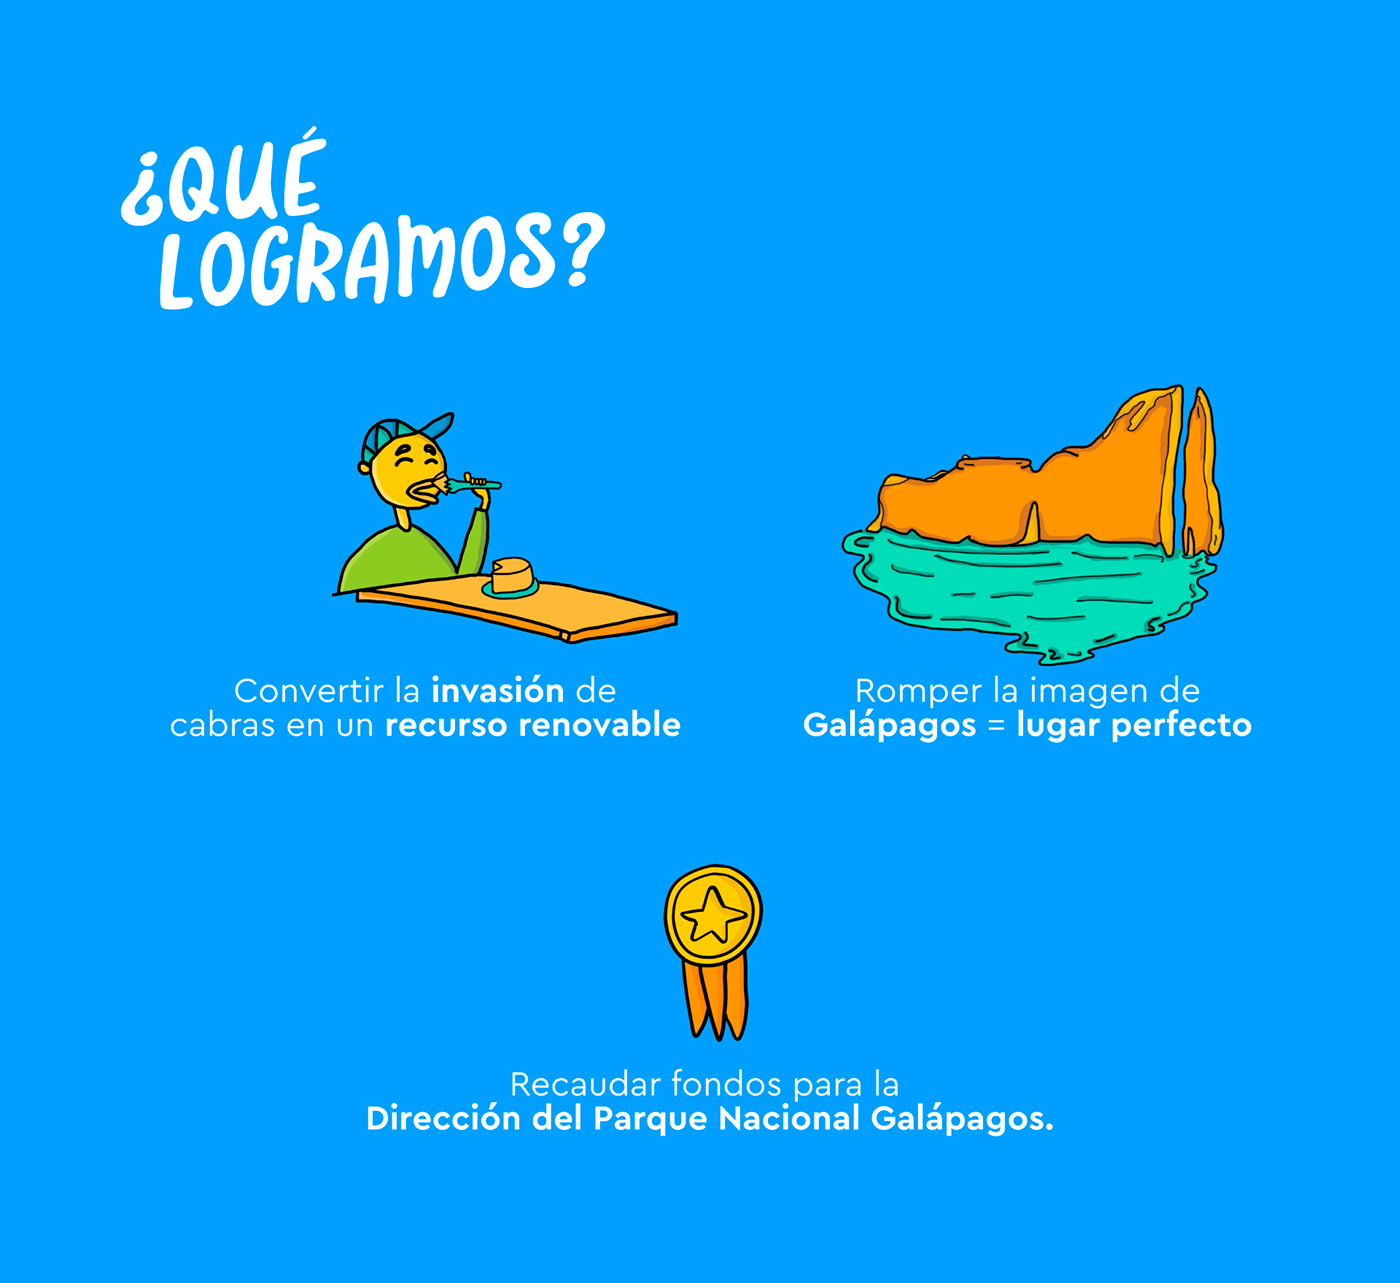 ads Ecuador Galapagos ILLUSTRATION  campaign condor Advertising  eco friendly environment